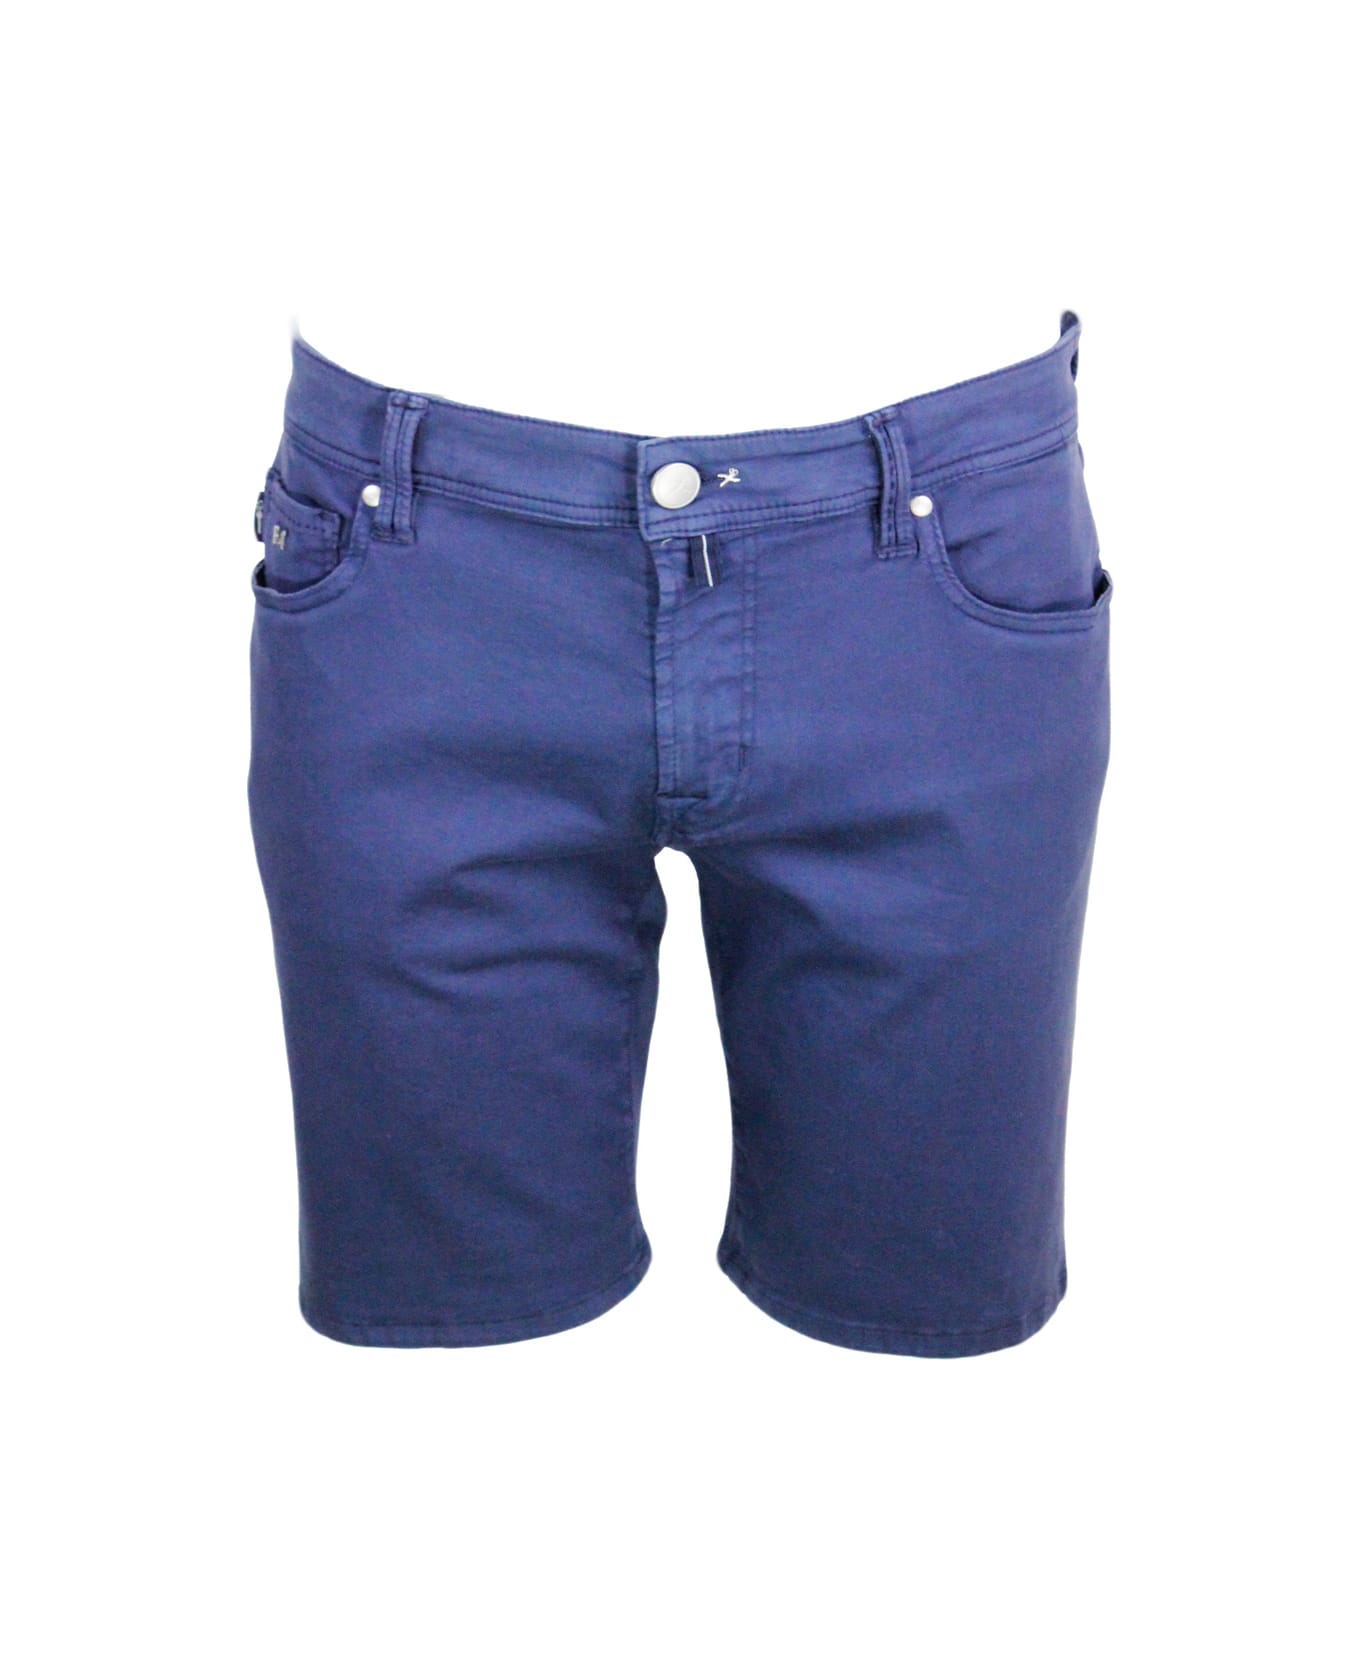 Sartoria Tramarossa Ascanio Slim Bermuda Shorts In Super Stretch Cotton Gabardine With 5 Pockets And Tailored Stitching - Blu light ショートパンツ